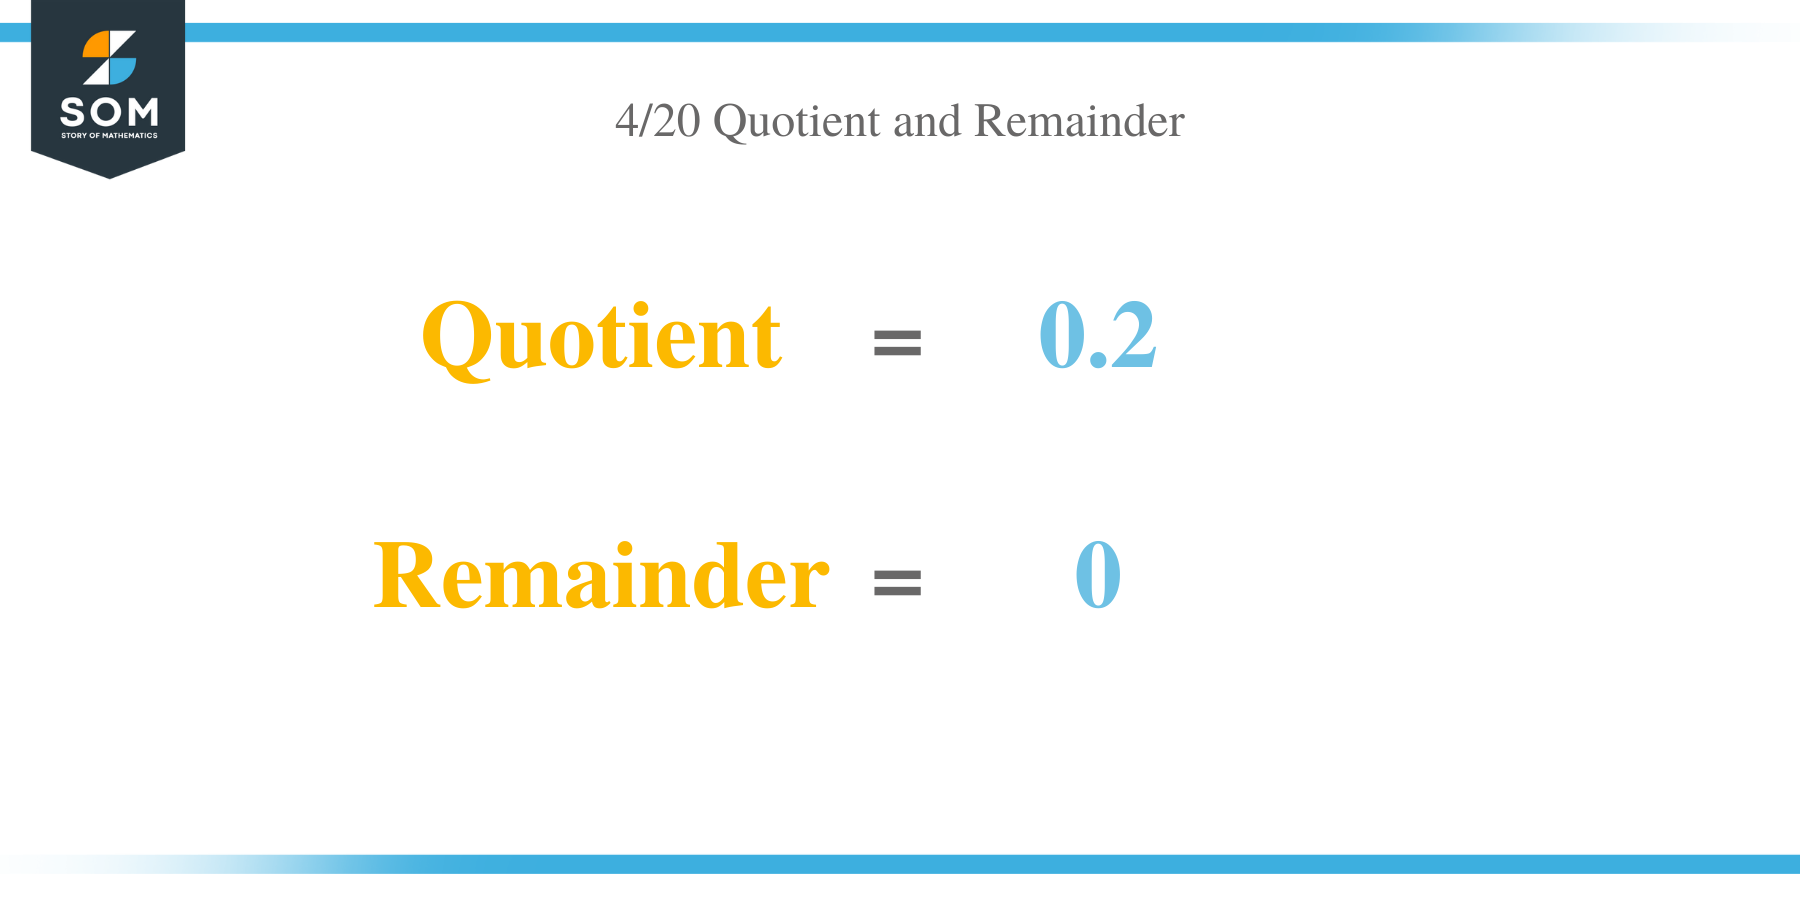 Quotient and Remainder of 4 per 20